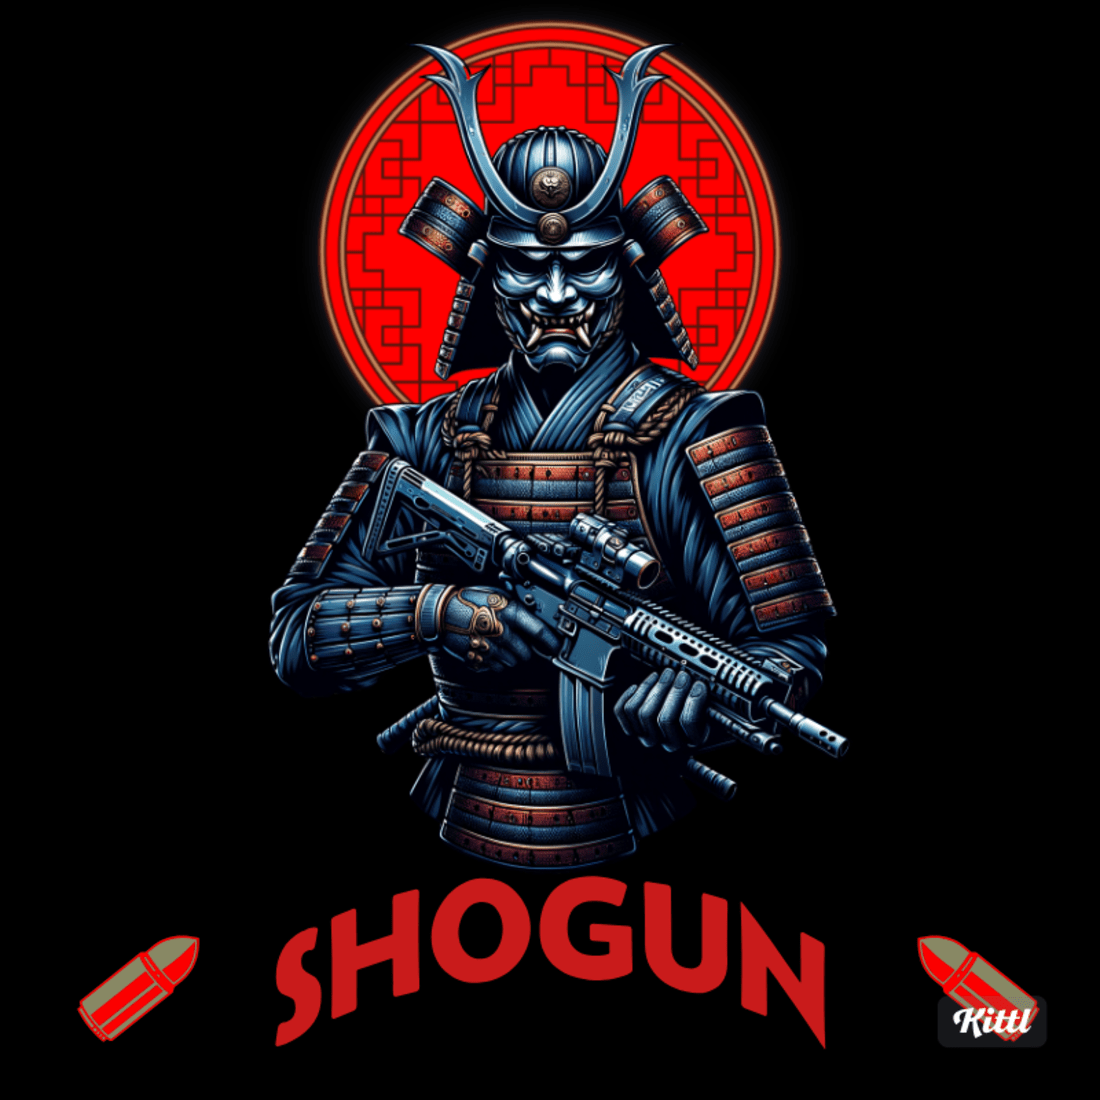 shogun T-shirt preview image.